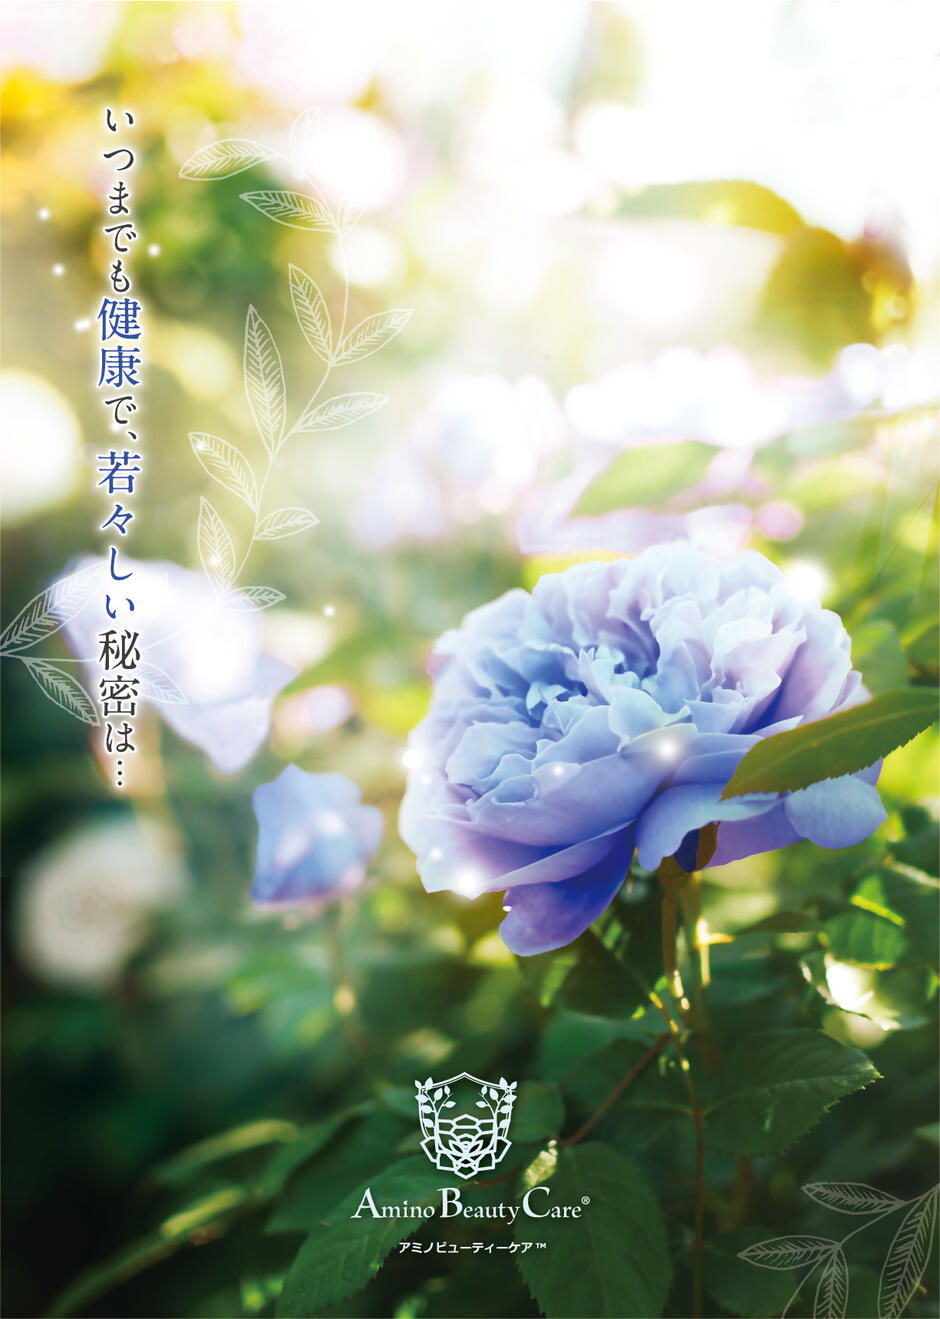 Amino Beauty Care&reg;　A4ポスターの画面